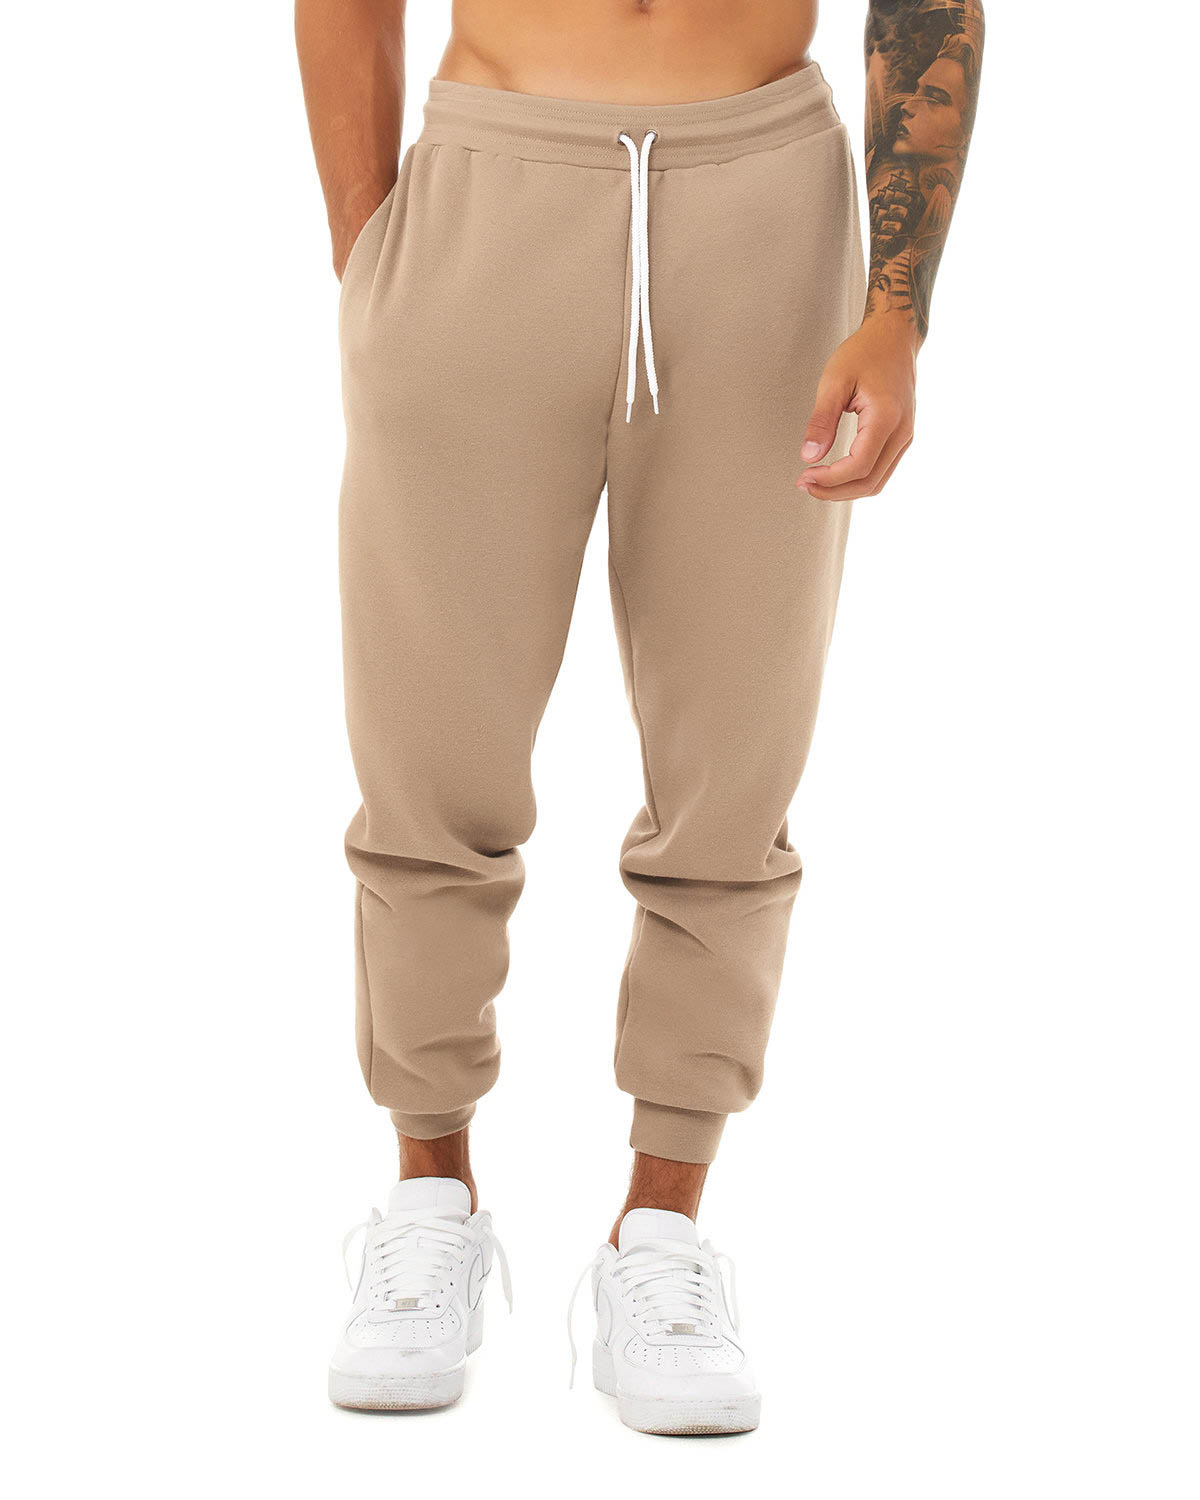 Custom Sweatpants Cheap Design Online